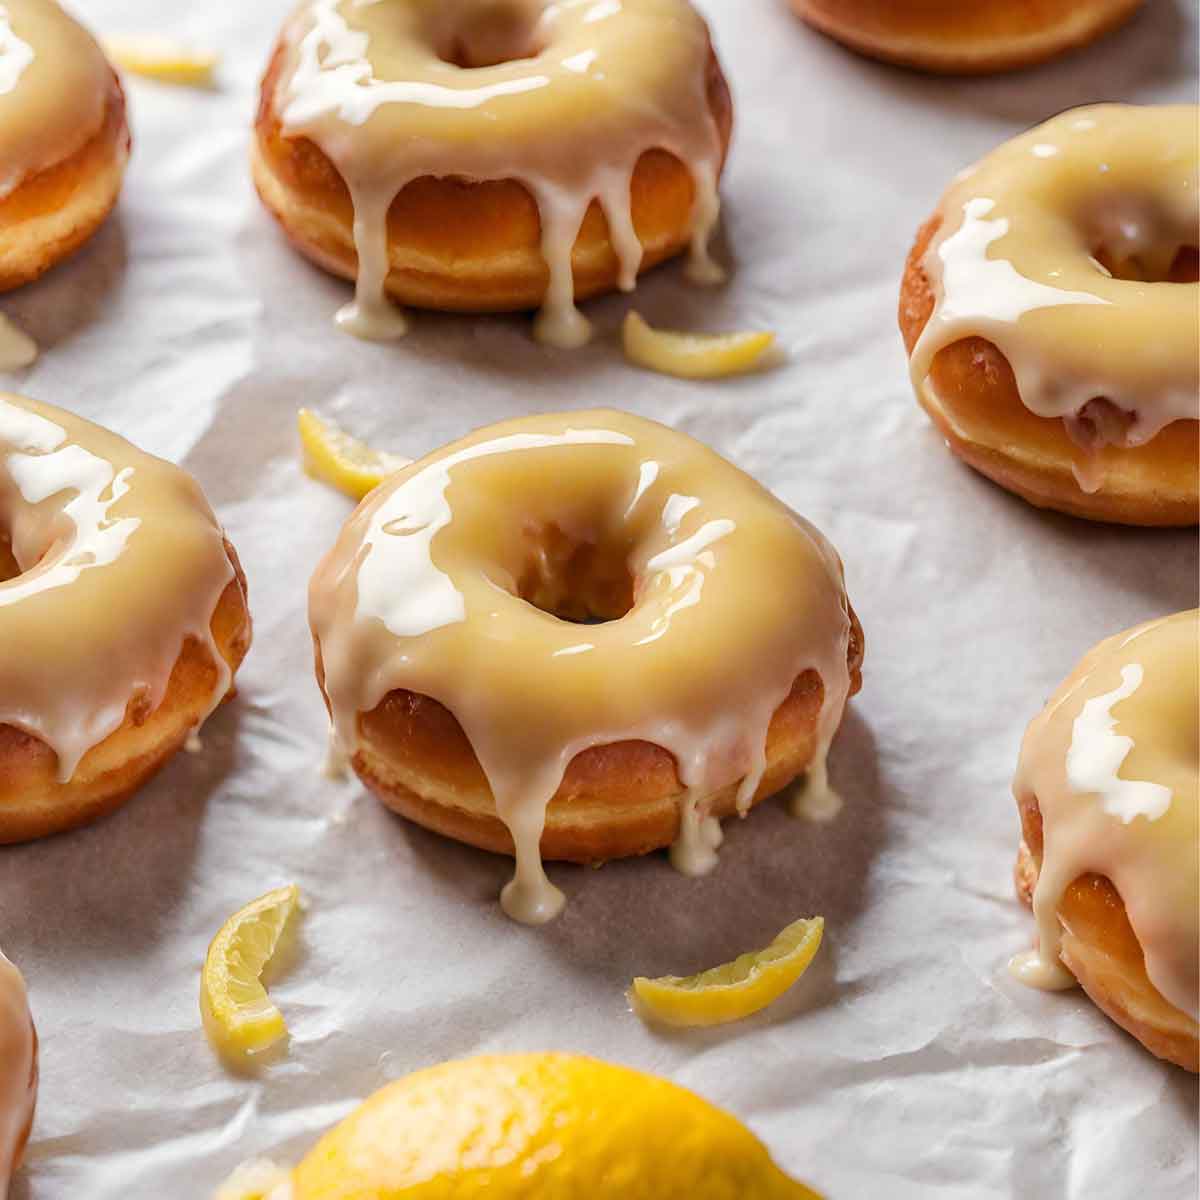 Several Glazed Lemon Donuts